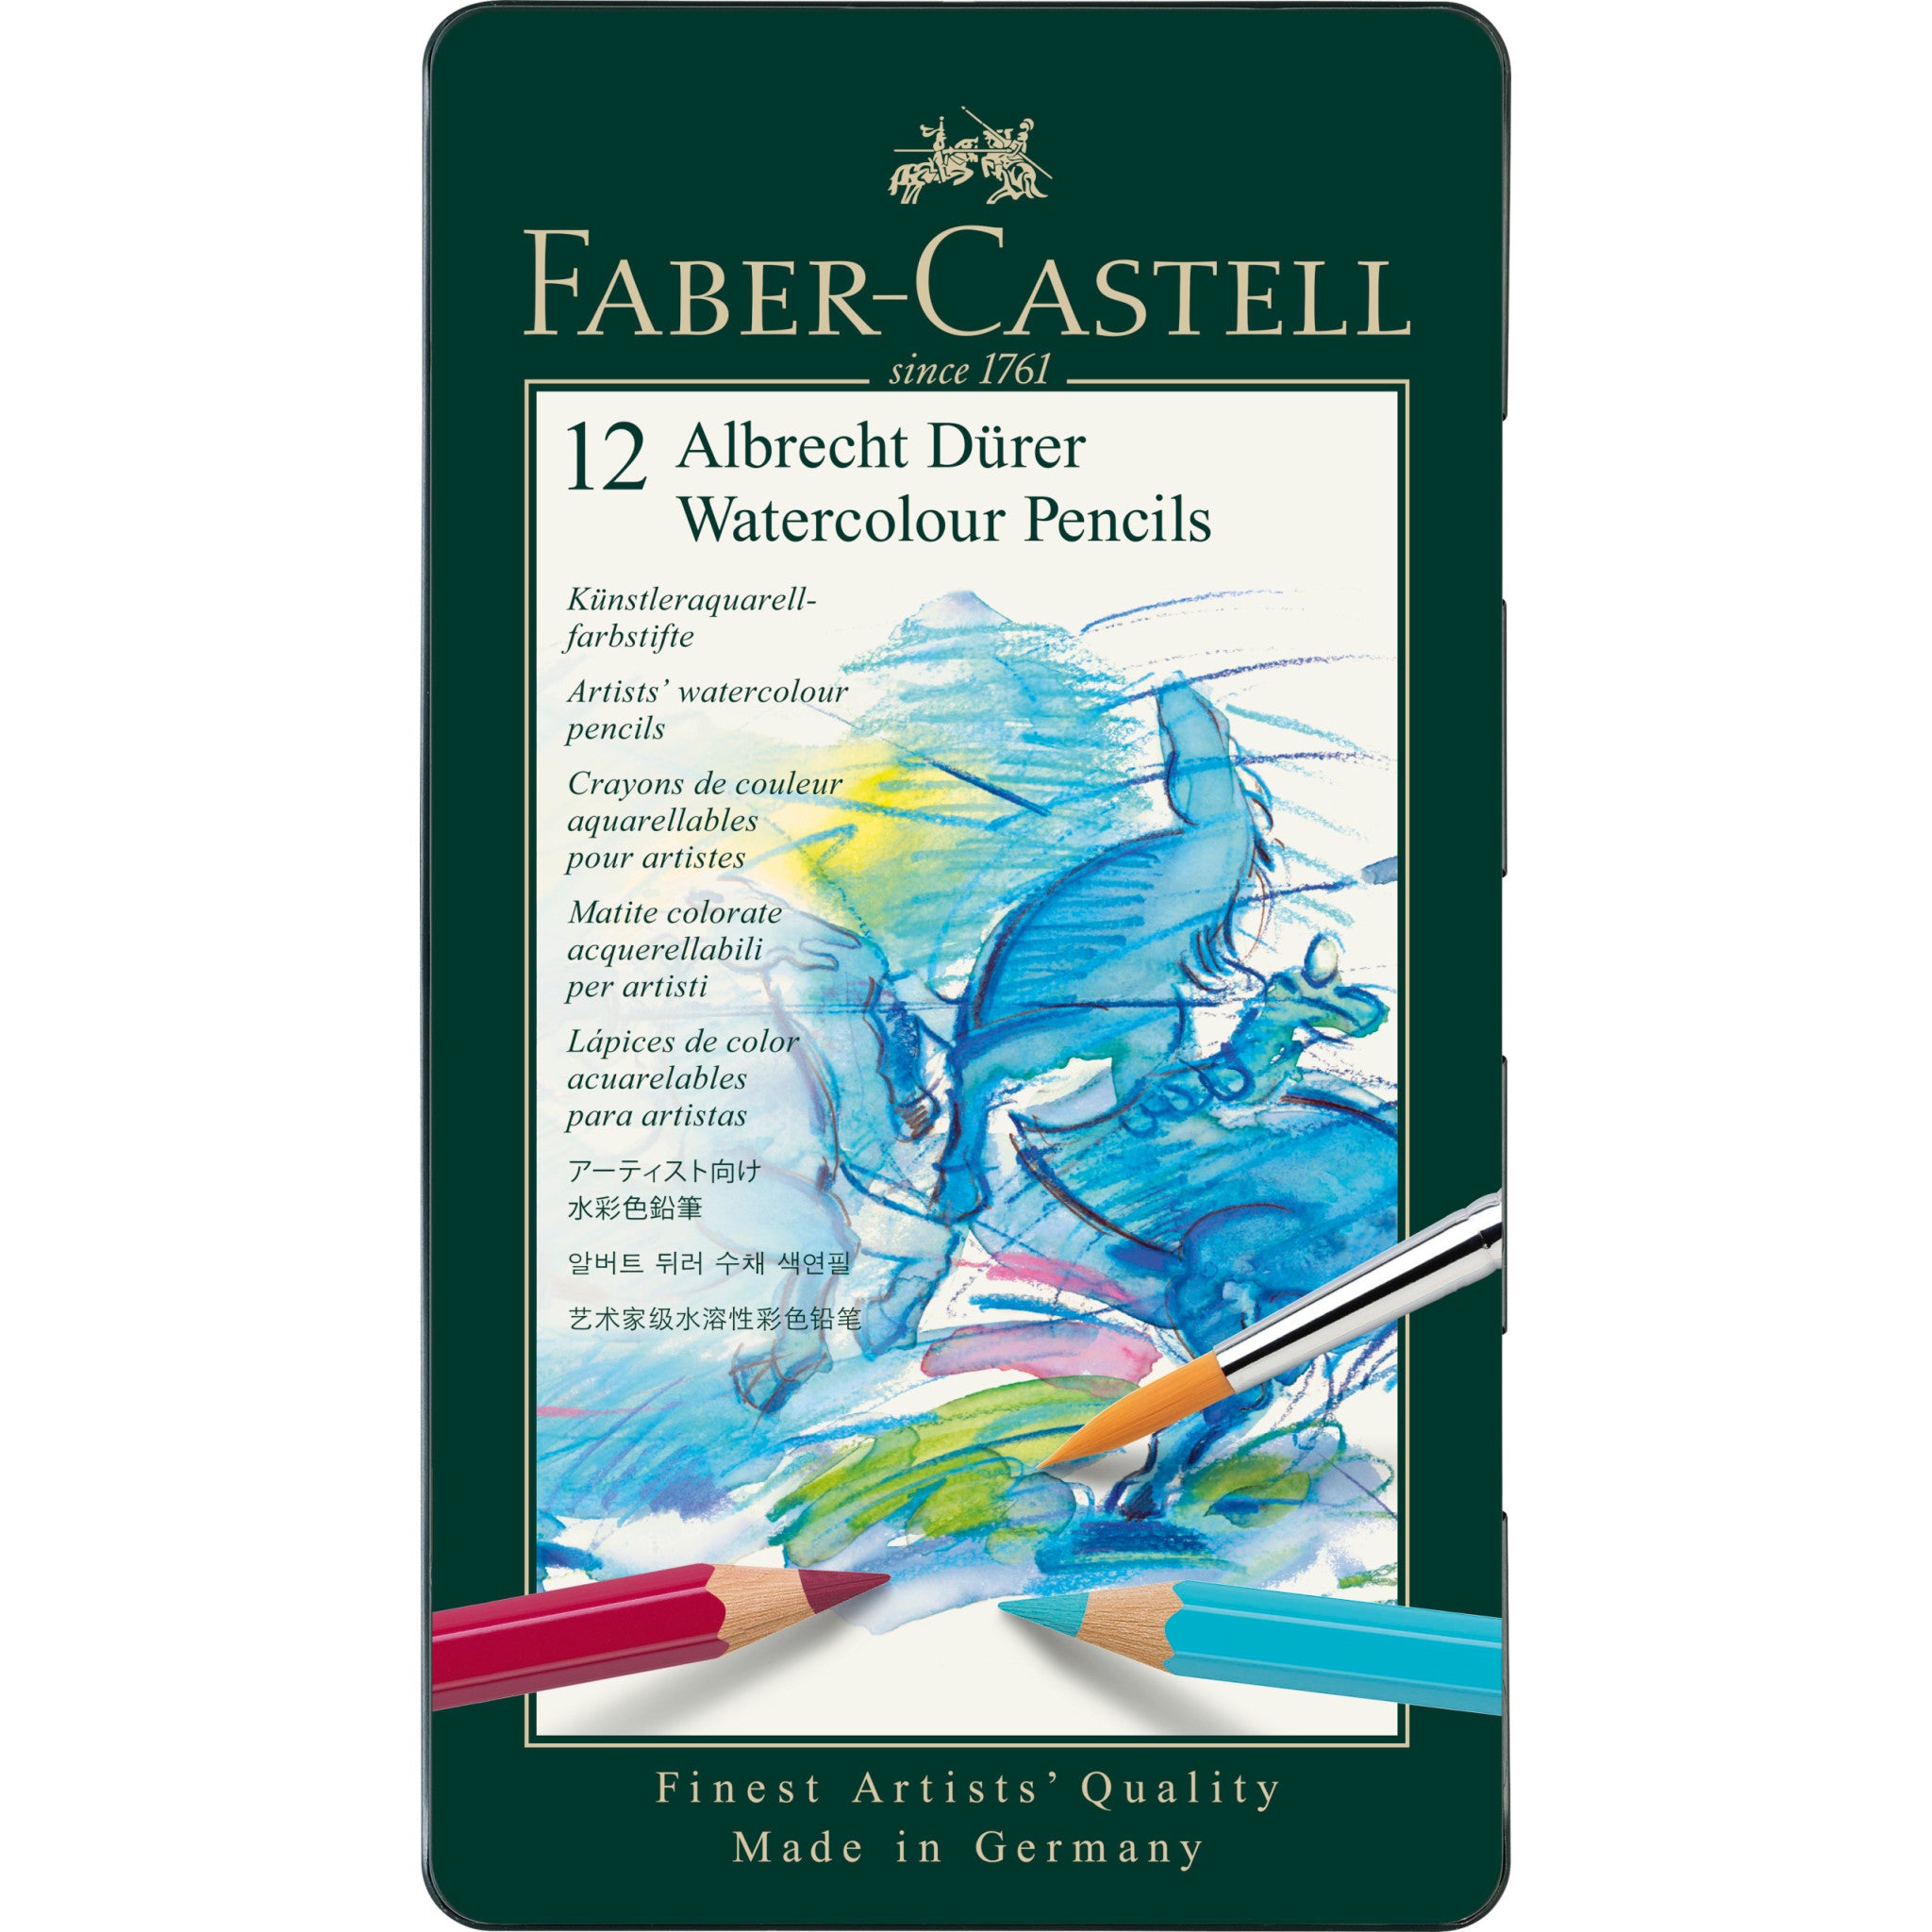 Aquarelle & lettering aux crayons aquarellables